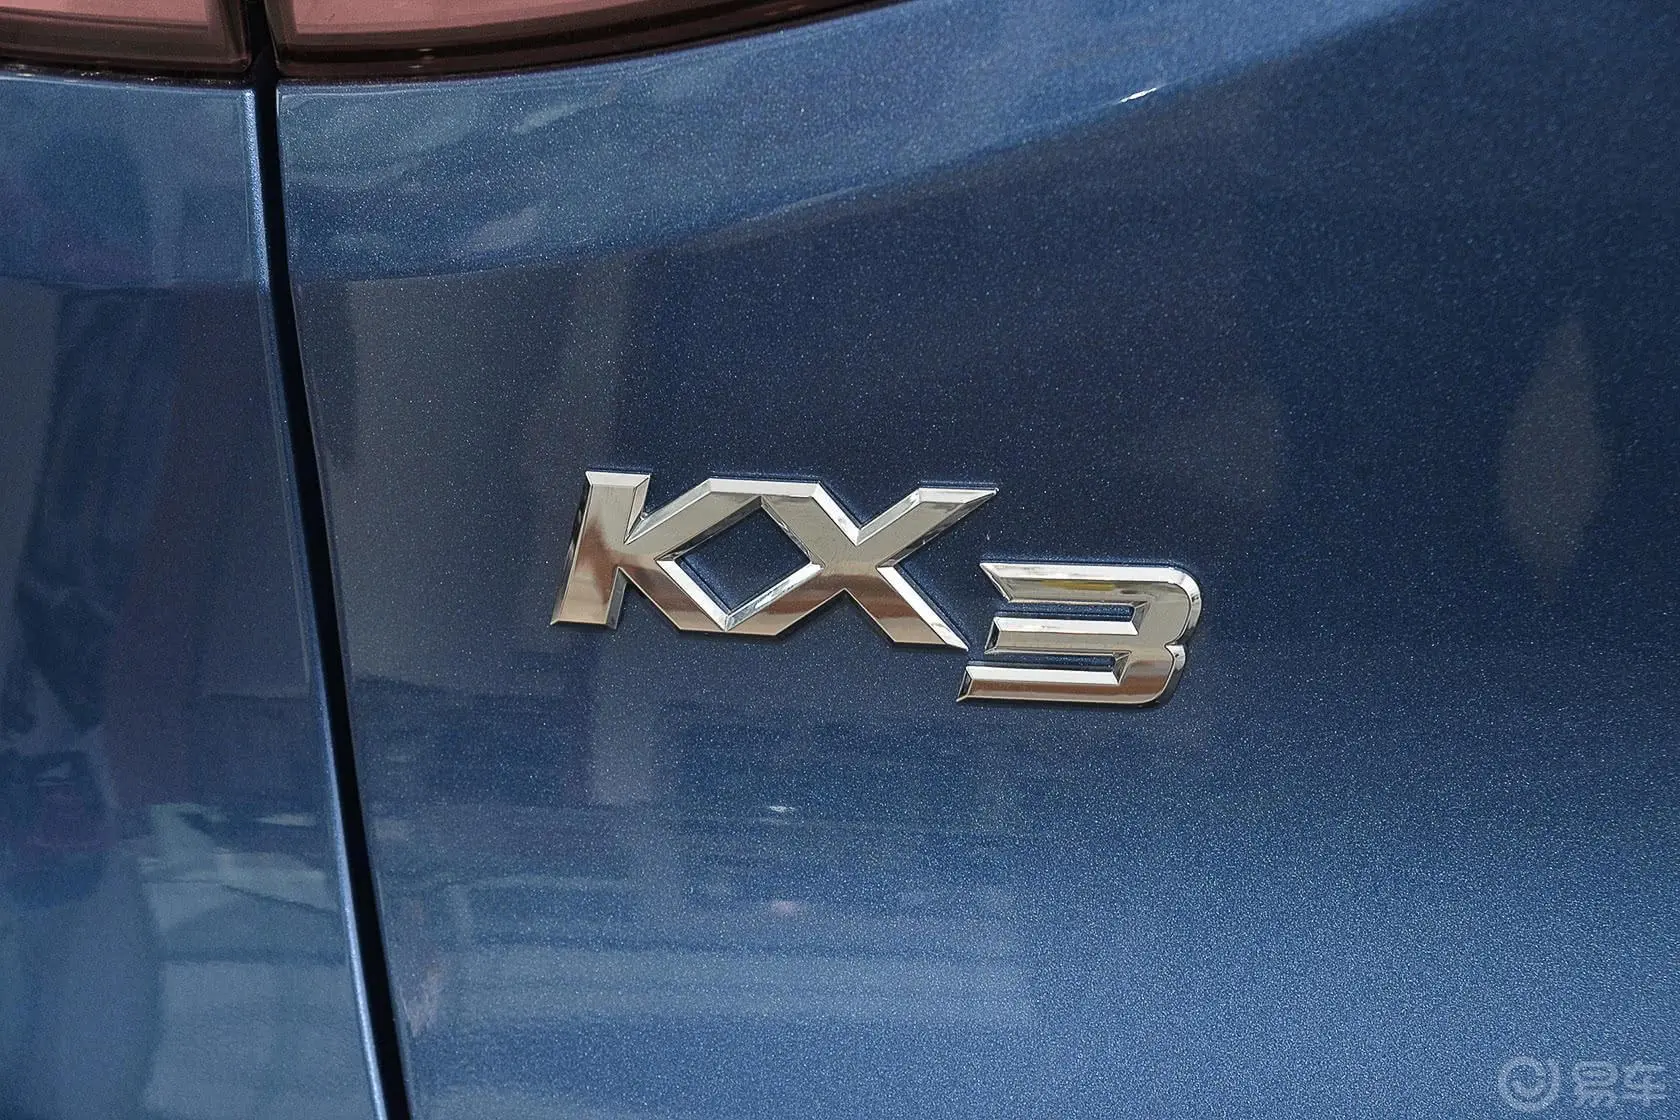 KX3傲跑1.6L 自动 两驱 DLX尾标